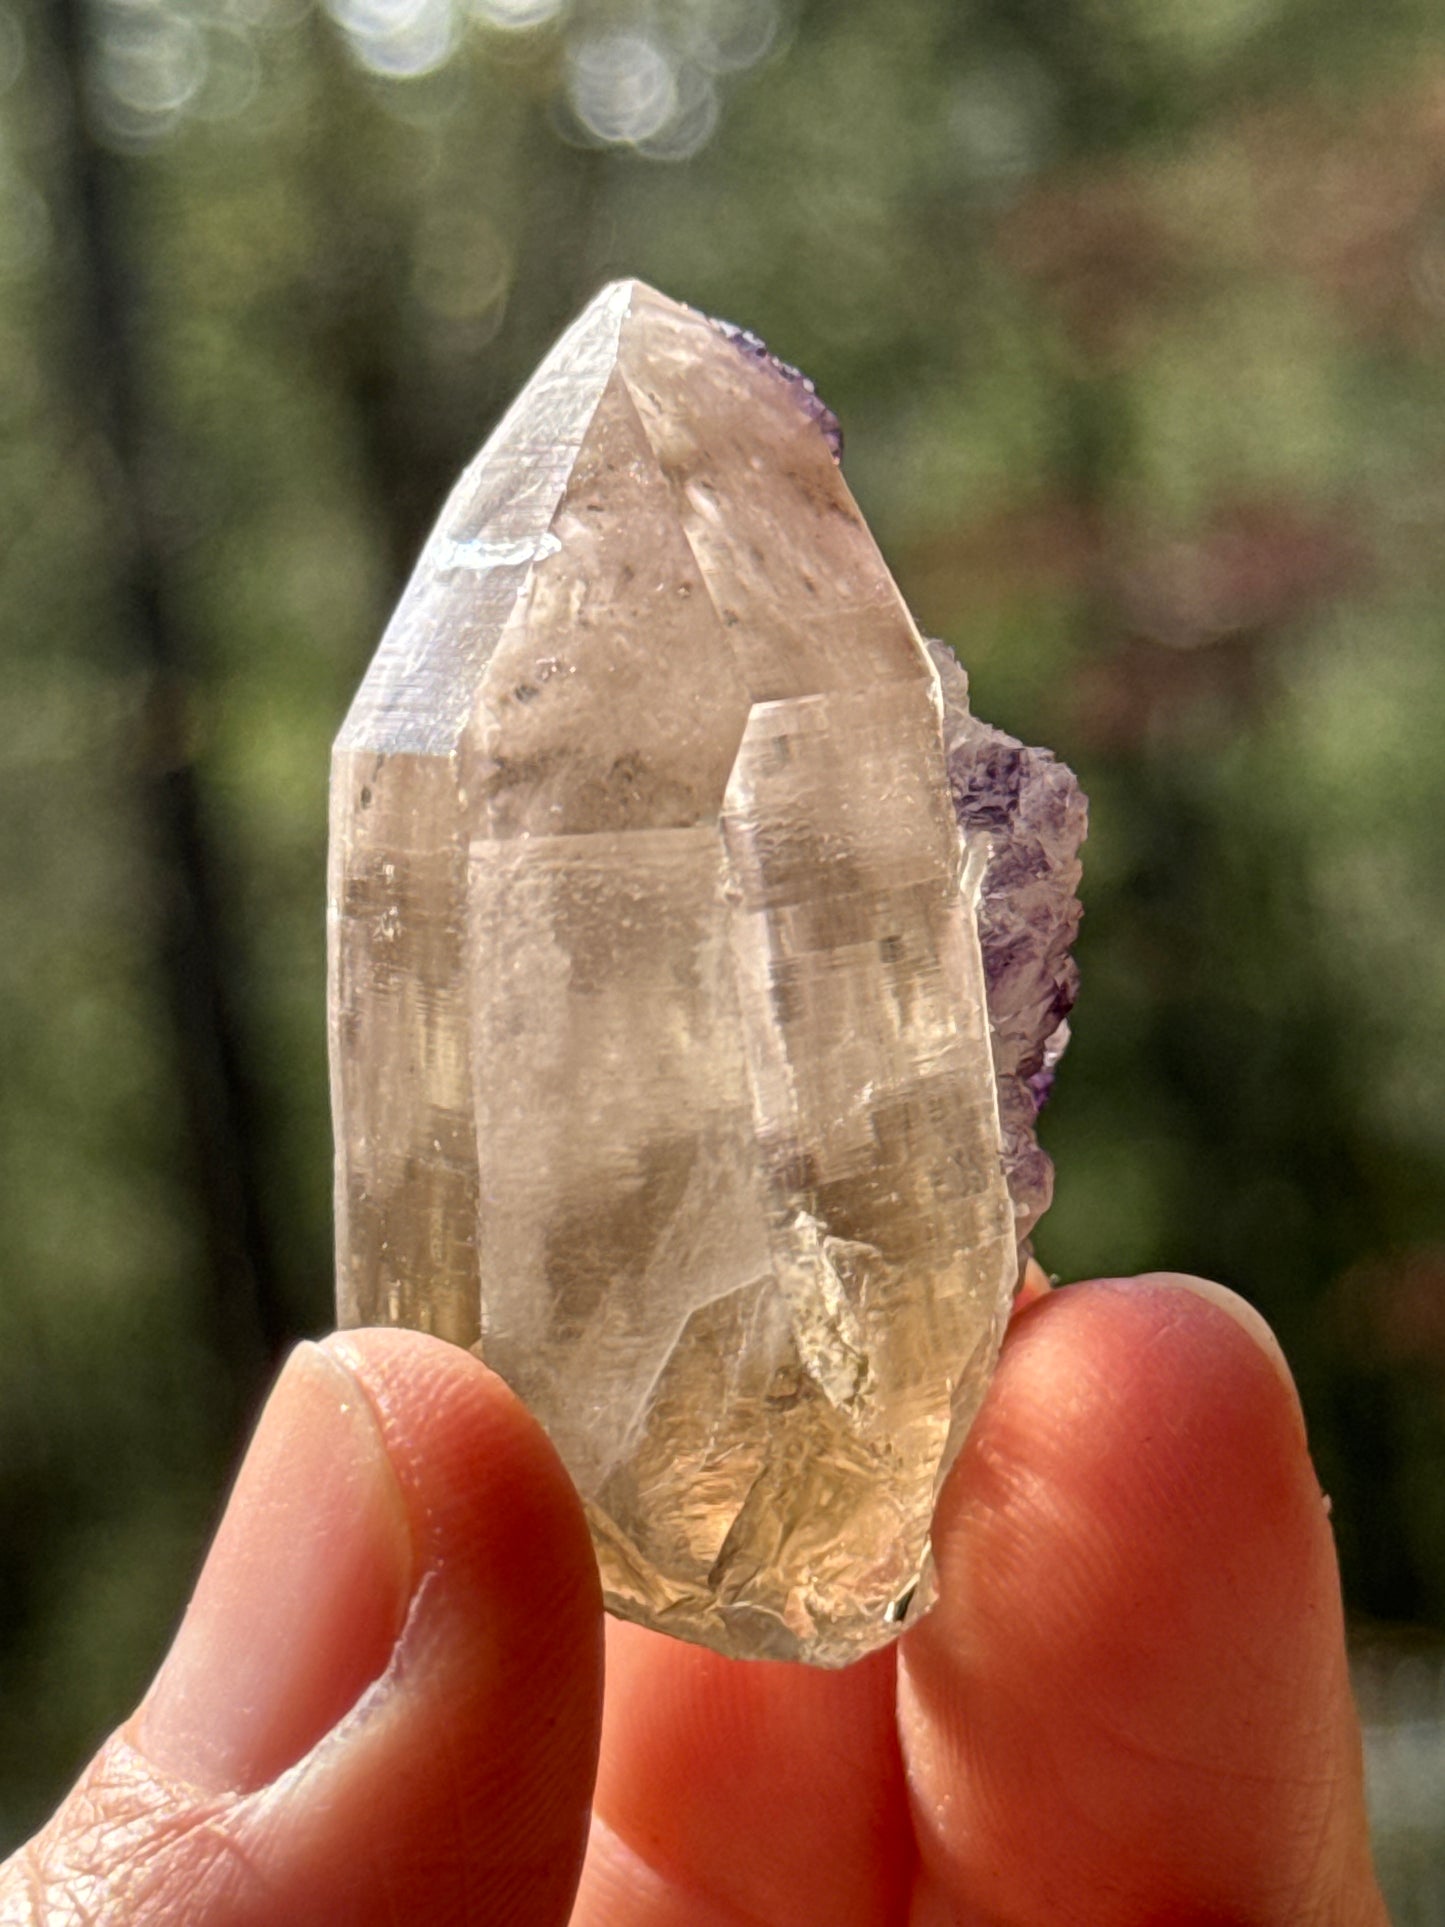 Purple Fluorite on Quartz, 35g Yaogangxian Minerals